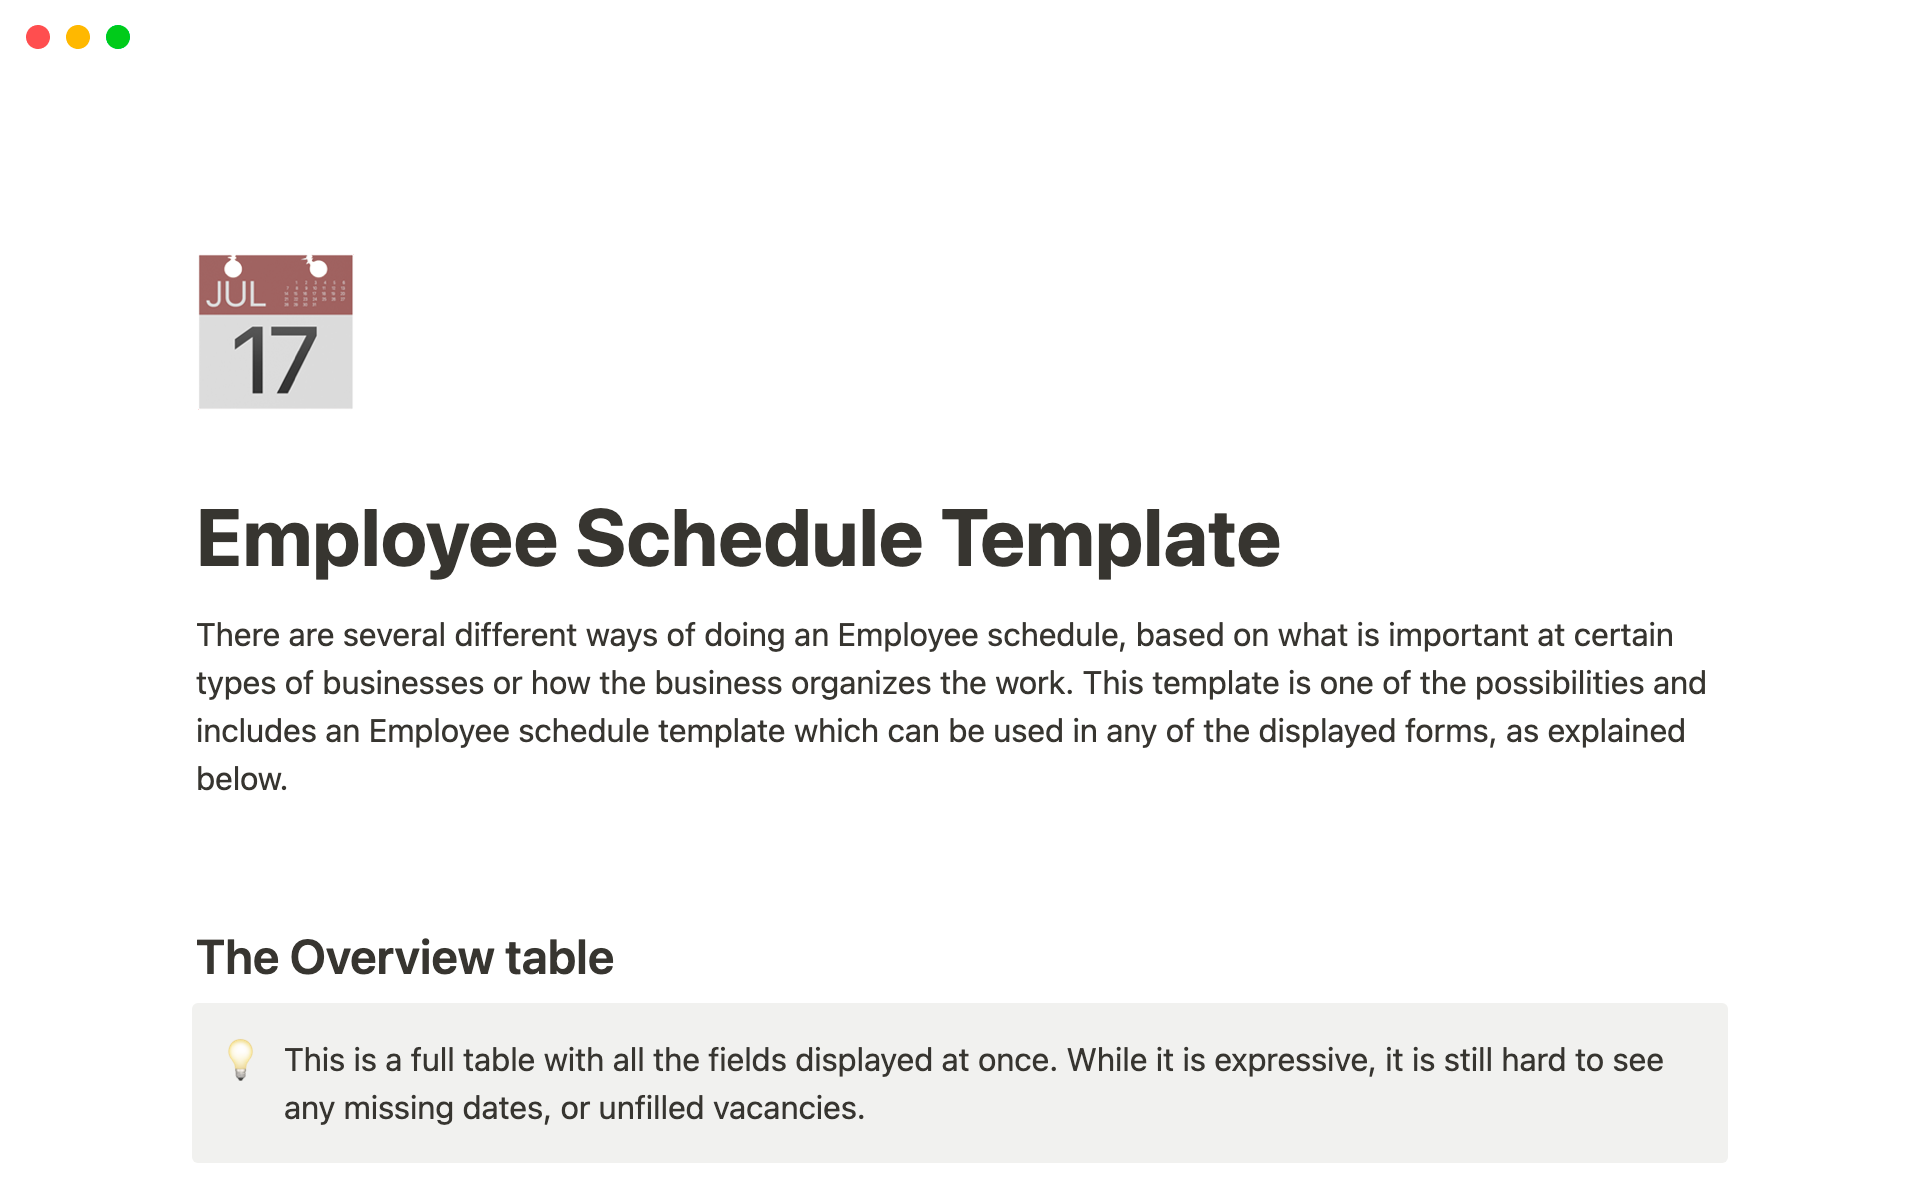 Aperçu du modèle de Employee schedule